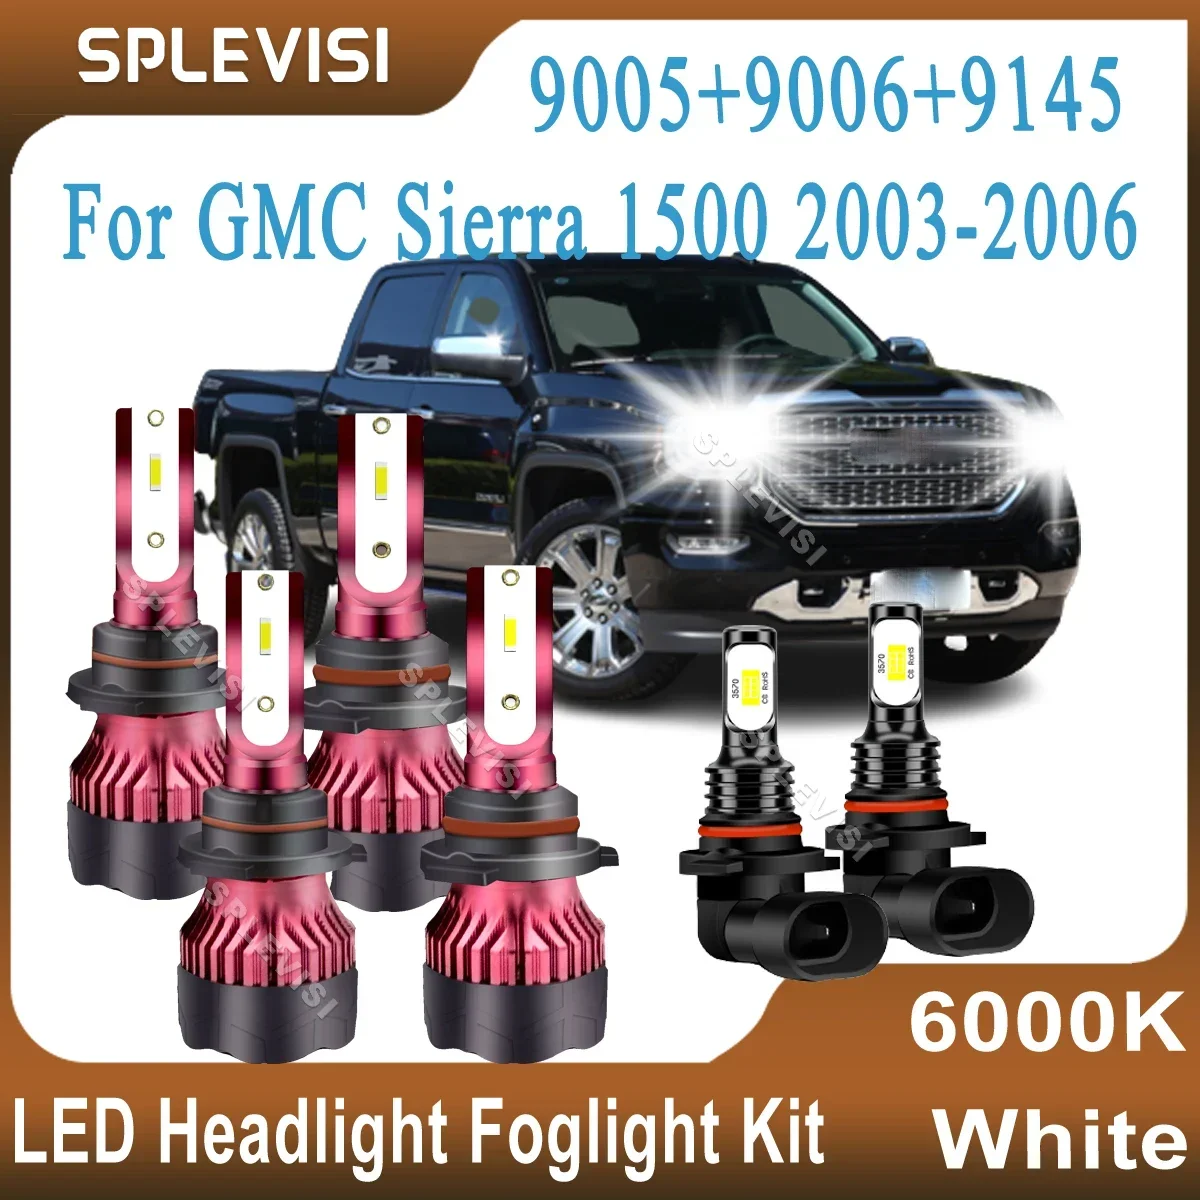 

LED Car Headlights 9005 High 9006 Low Beam +2x 9145 LED Foglight Kit Pure White Combo For GMC Sierra 1500 2003 2004 2005 2006